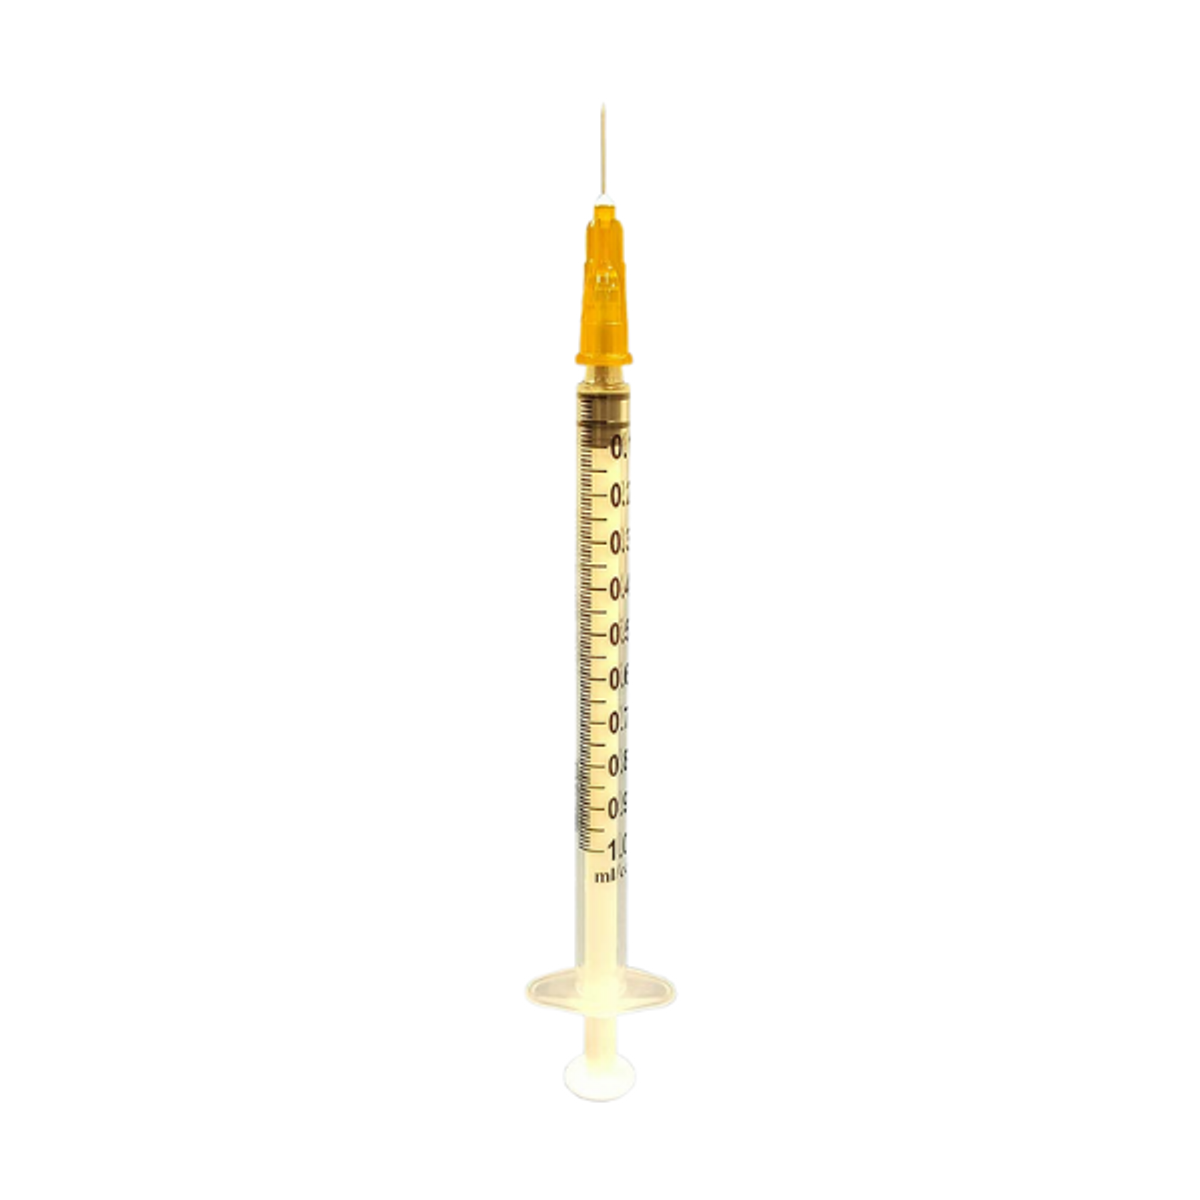 Exel Tuberculin Syringe with Detachable Luer-Slip Needle